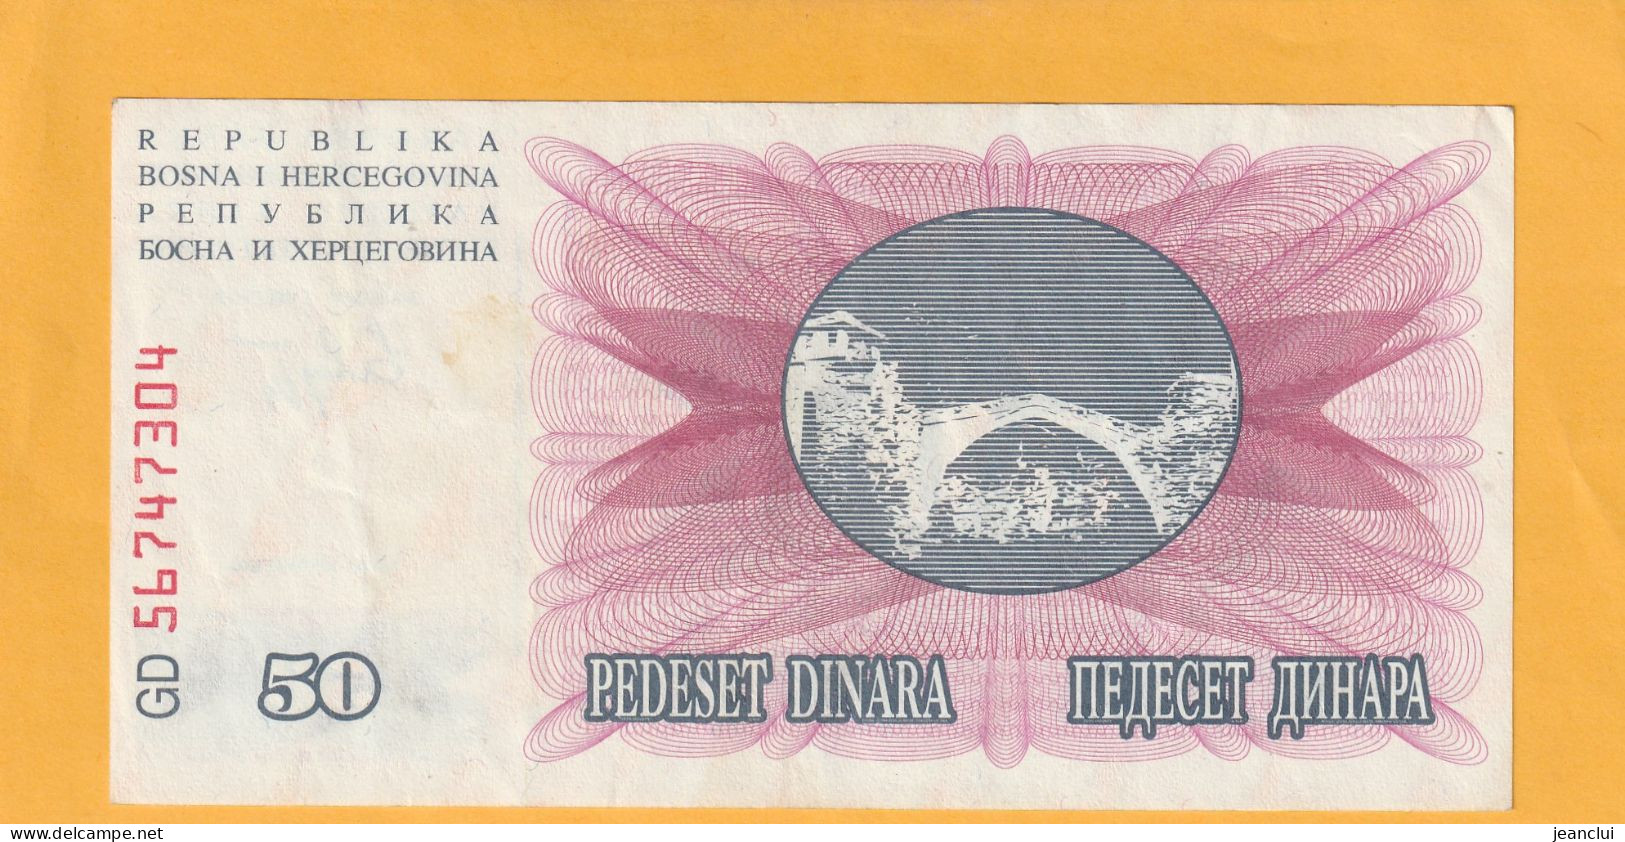 NARODNA BANKA BOSNE I HERCEGOVINE  .  50 DINARA  . 1-7-1992  .  N°  56 74 7304  .  2 SCANNES  .  BILLET EN TRES BEL ETAT - Bosnia And Herzegovina